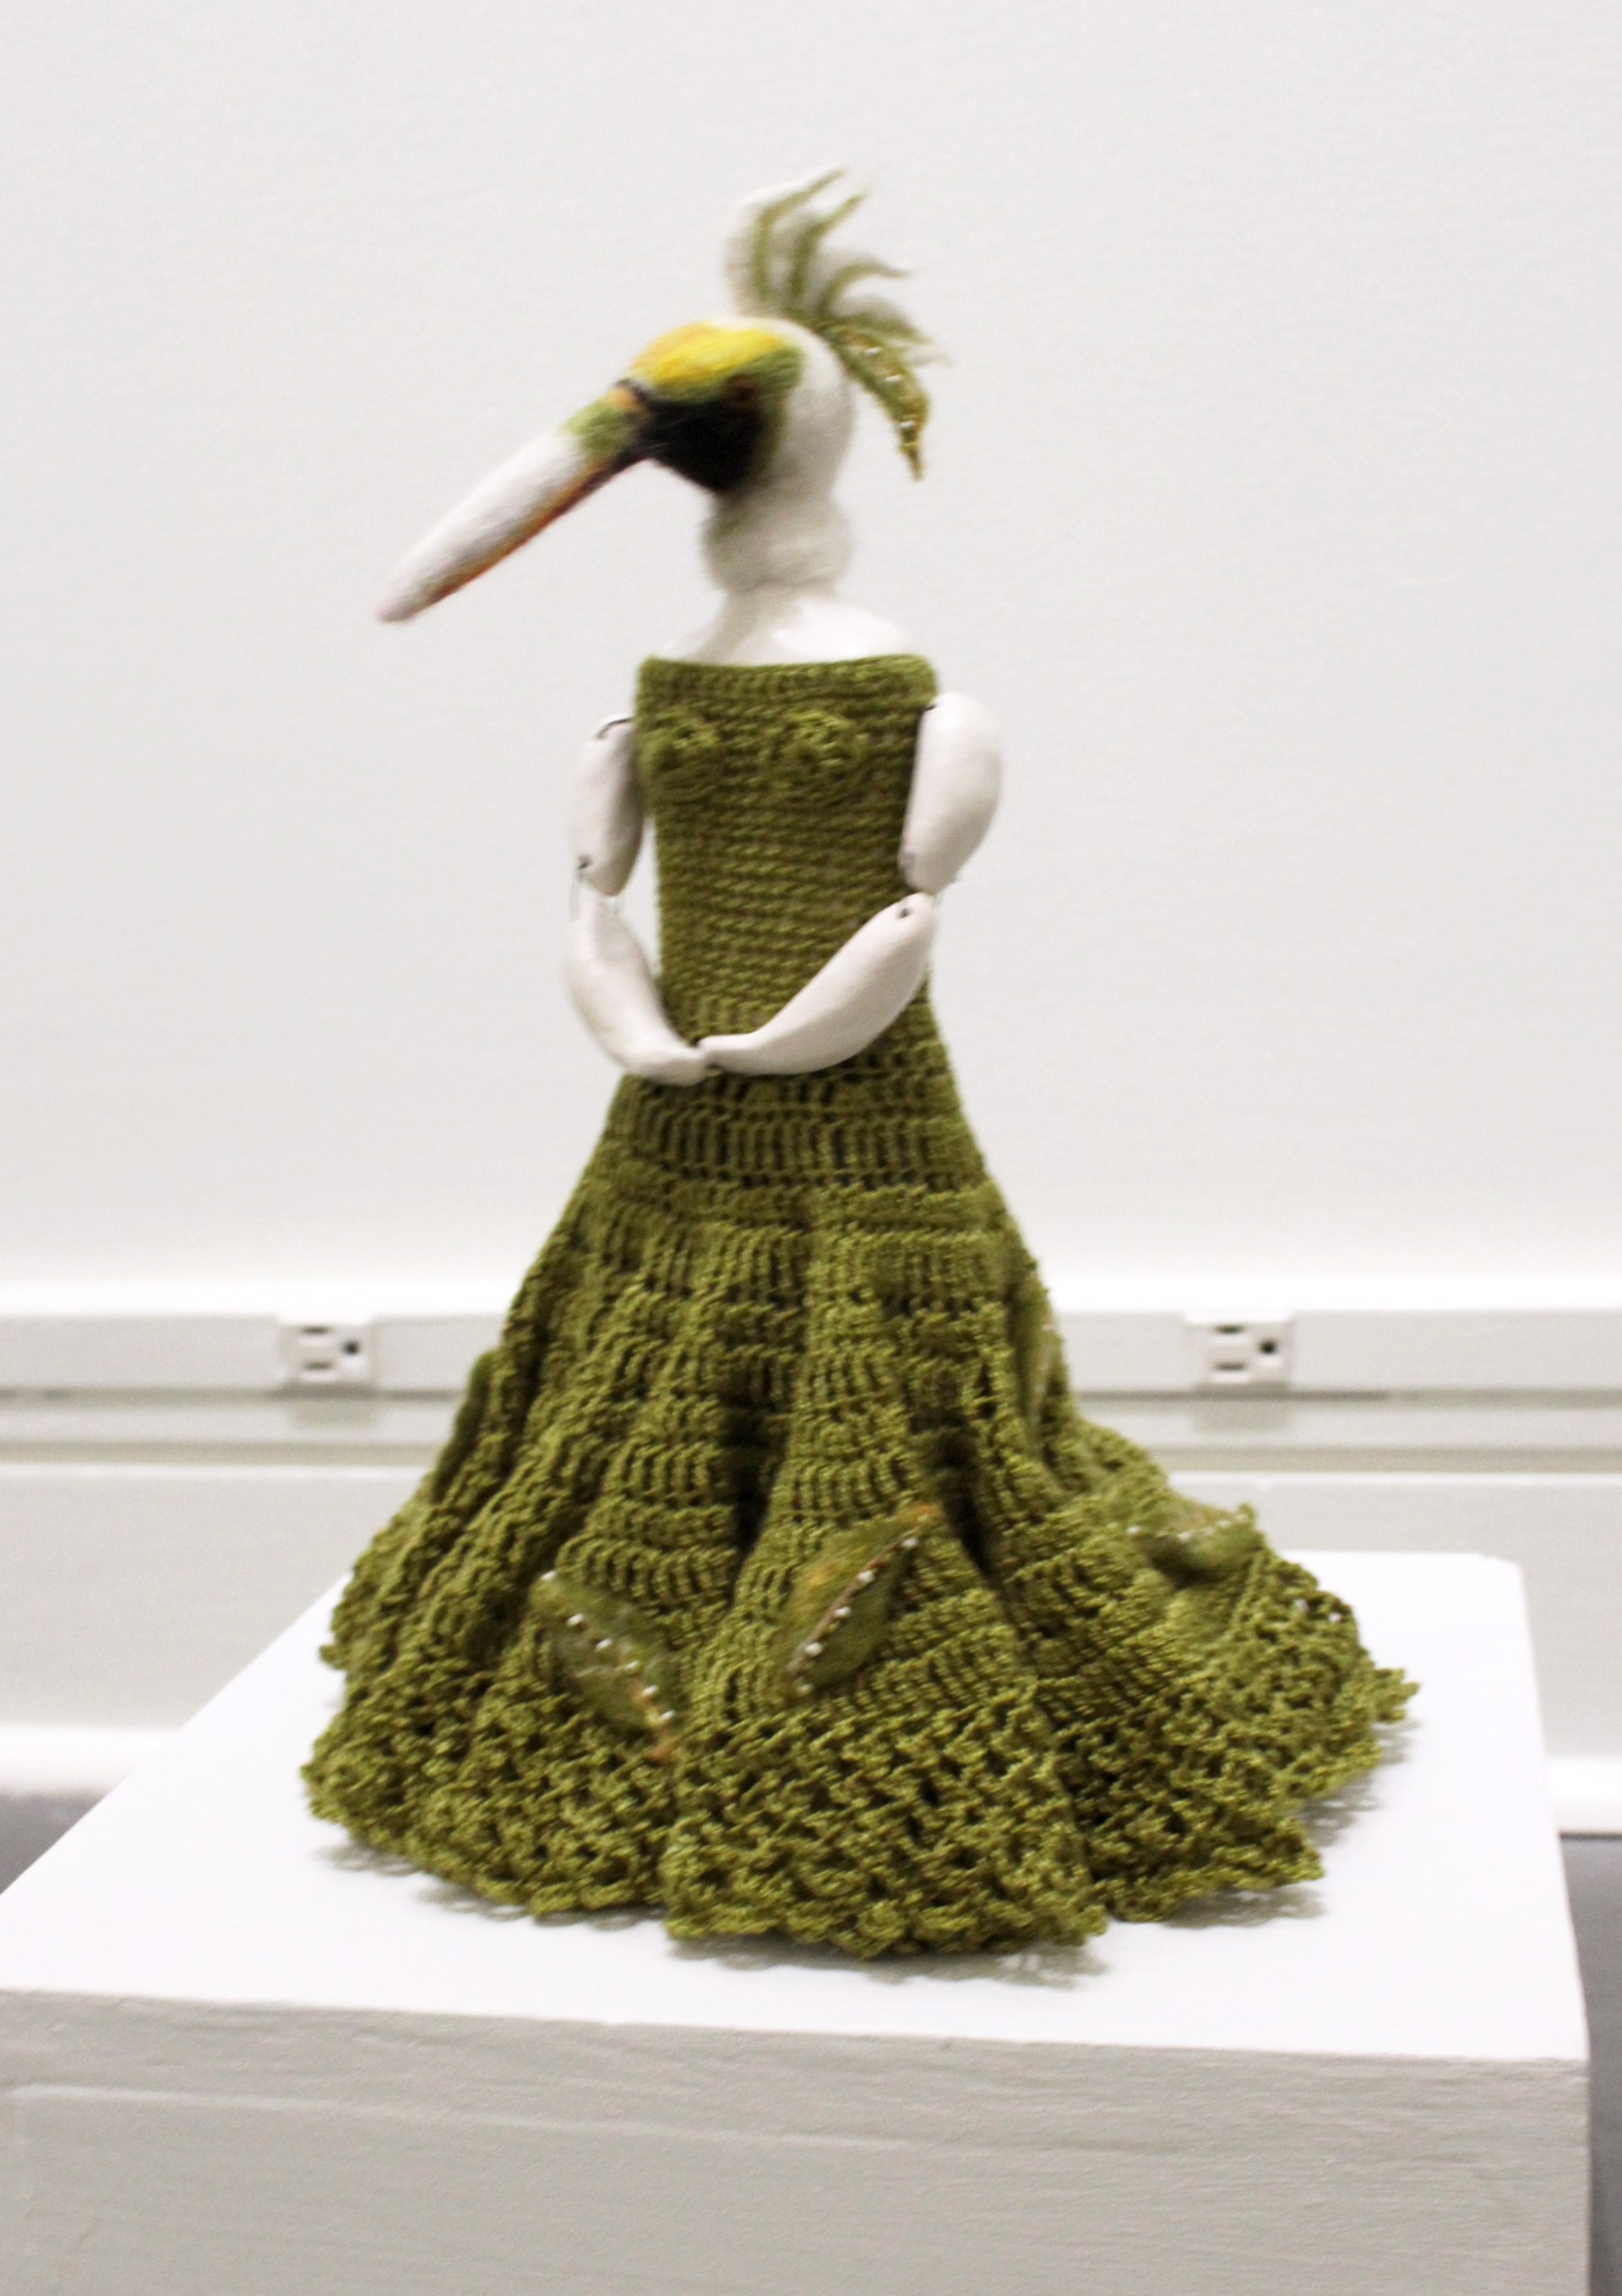 Untitled (standing bird in green dress) by Eva Maier